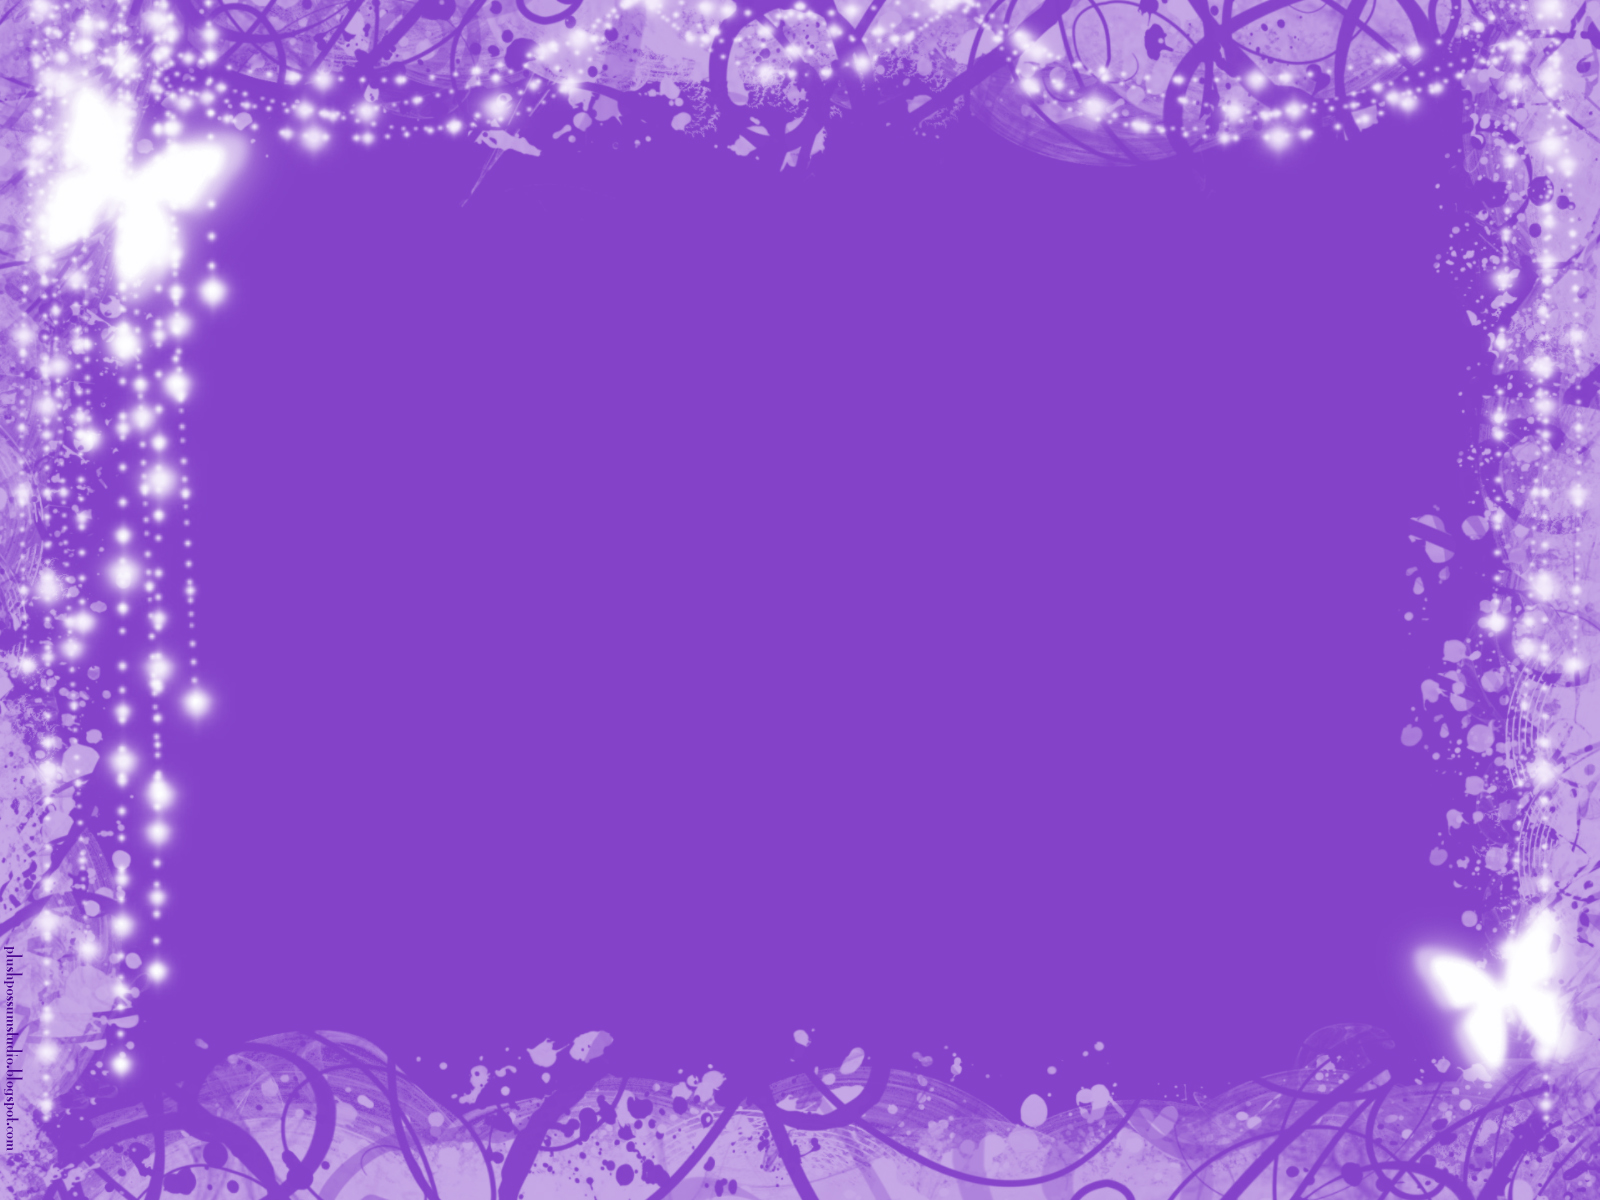 75+] Purple Color Background - WallpaperSafari